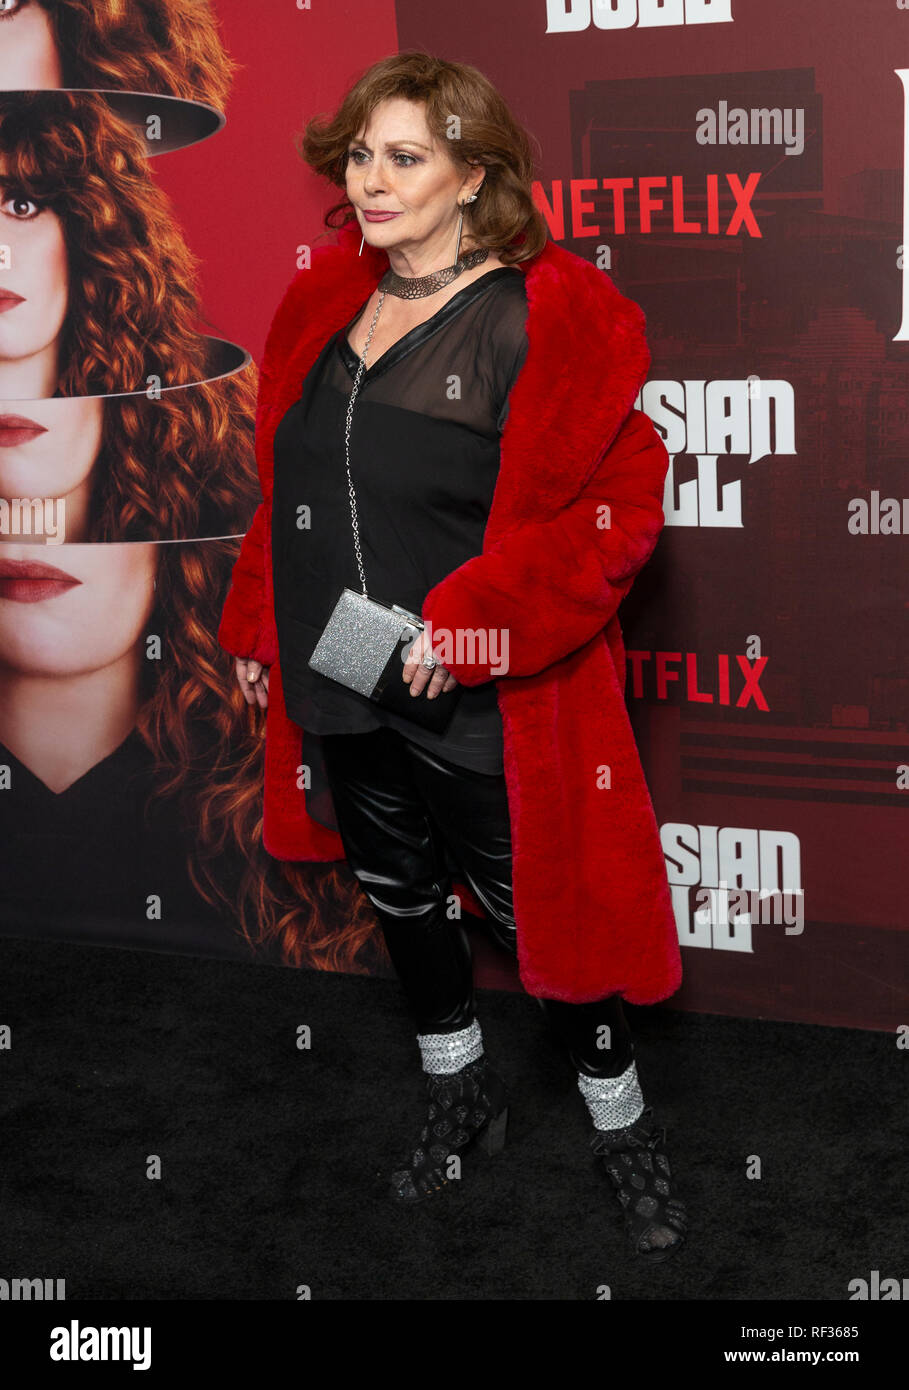 New York, NY - January 23, 2019: Elizabeth Ashley attends Russian Doll TV show season premiere at Metrograph Credit: lev radin/Alamy Live News Stock Photo